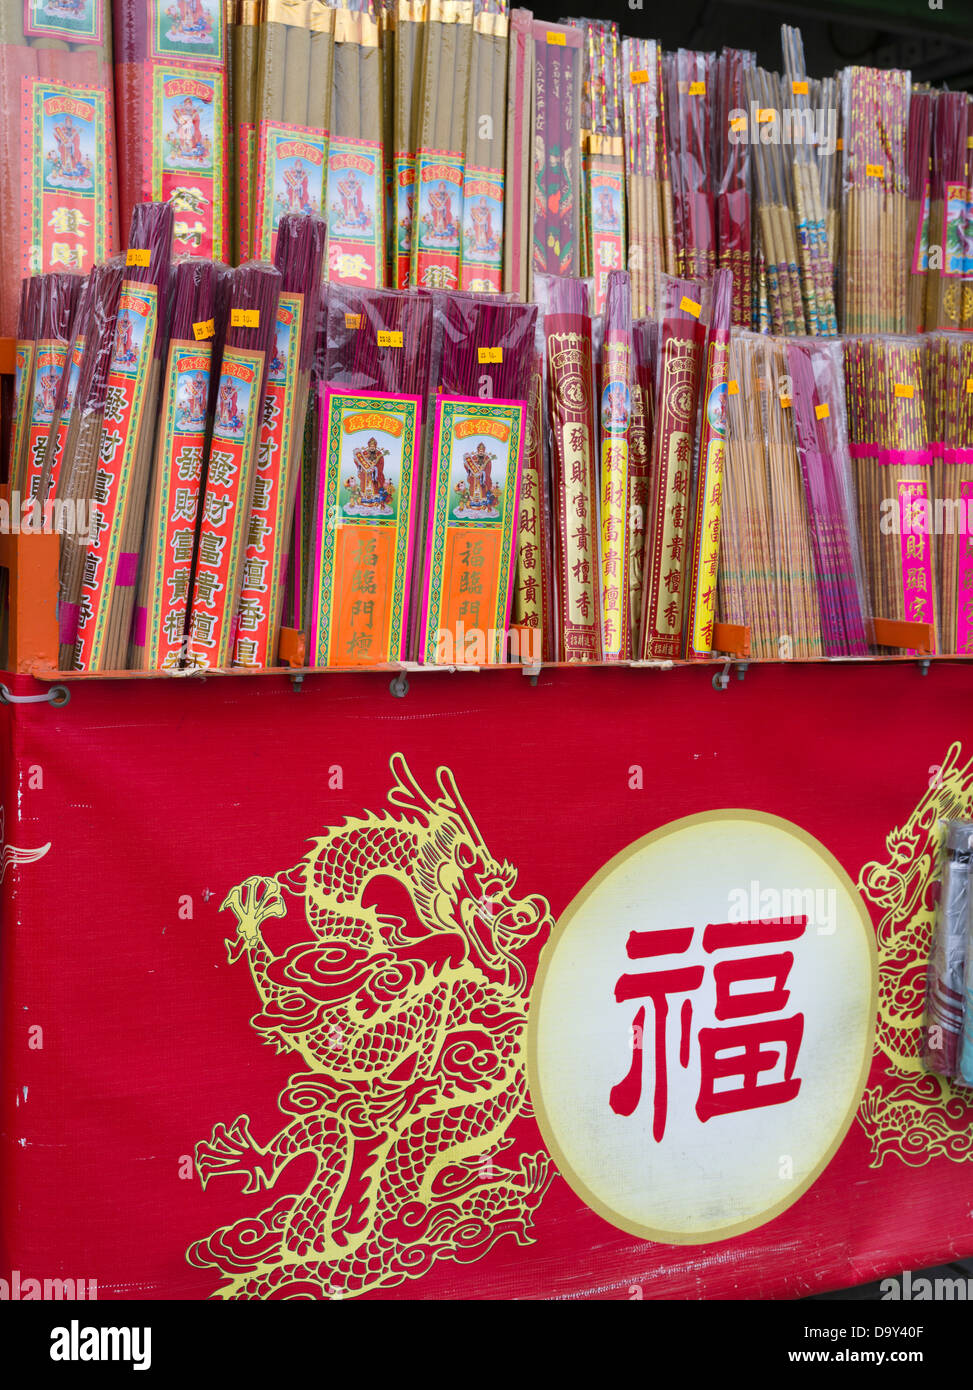 dh Po Lin LANTAU HONG KONG Colourful Joss sticks for sale Po Lin market stall Stock Photo